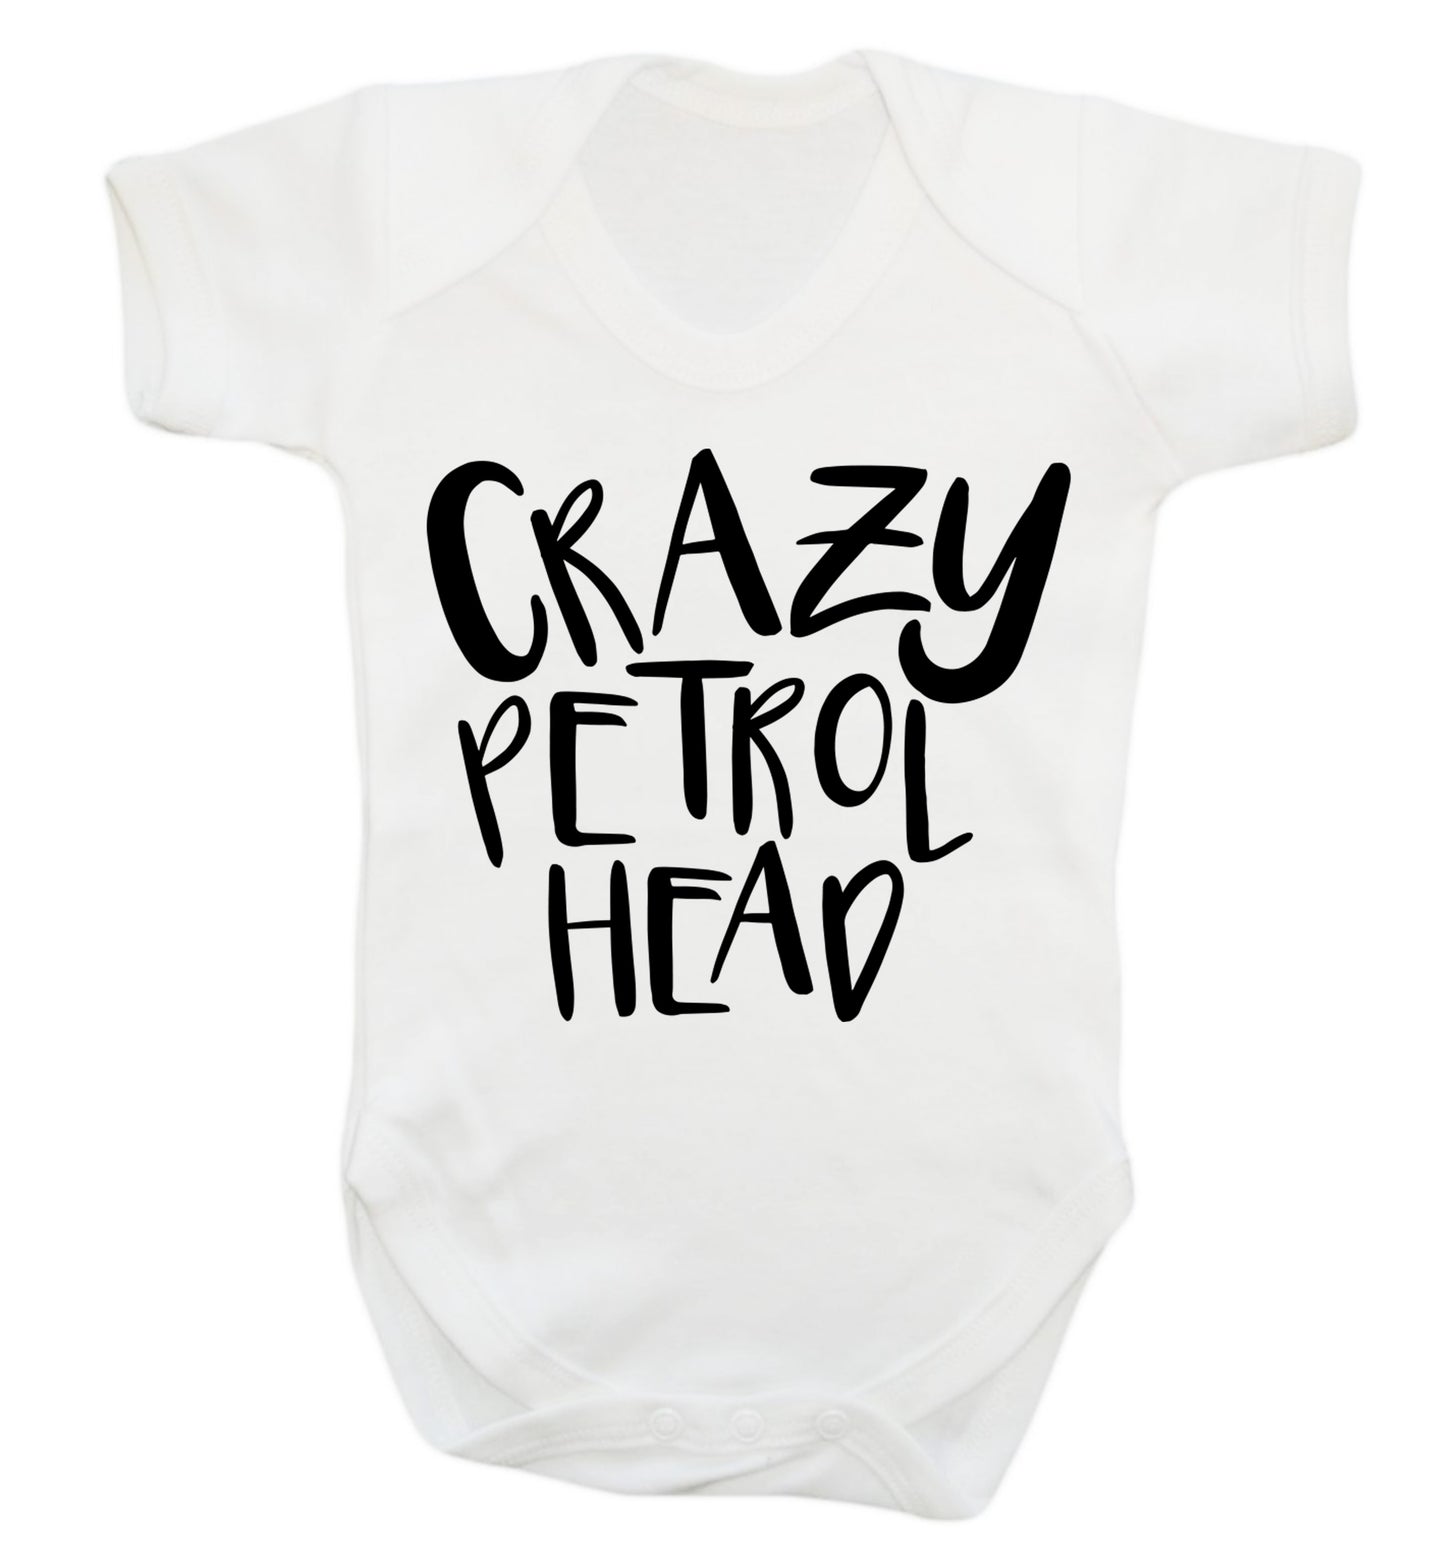 Crazy petrol head Baby Vest white 18-24 months